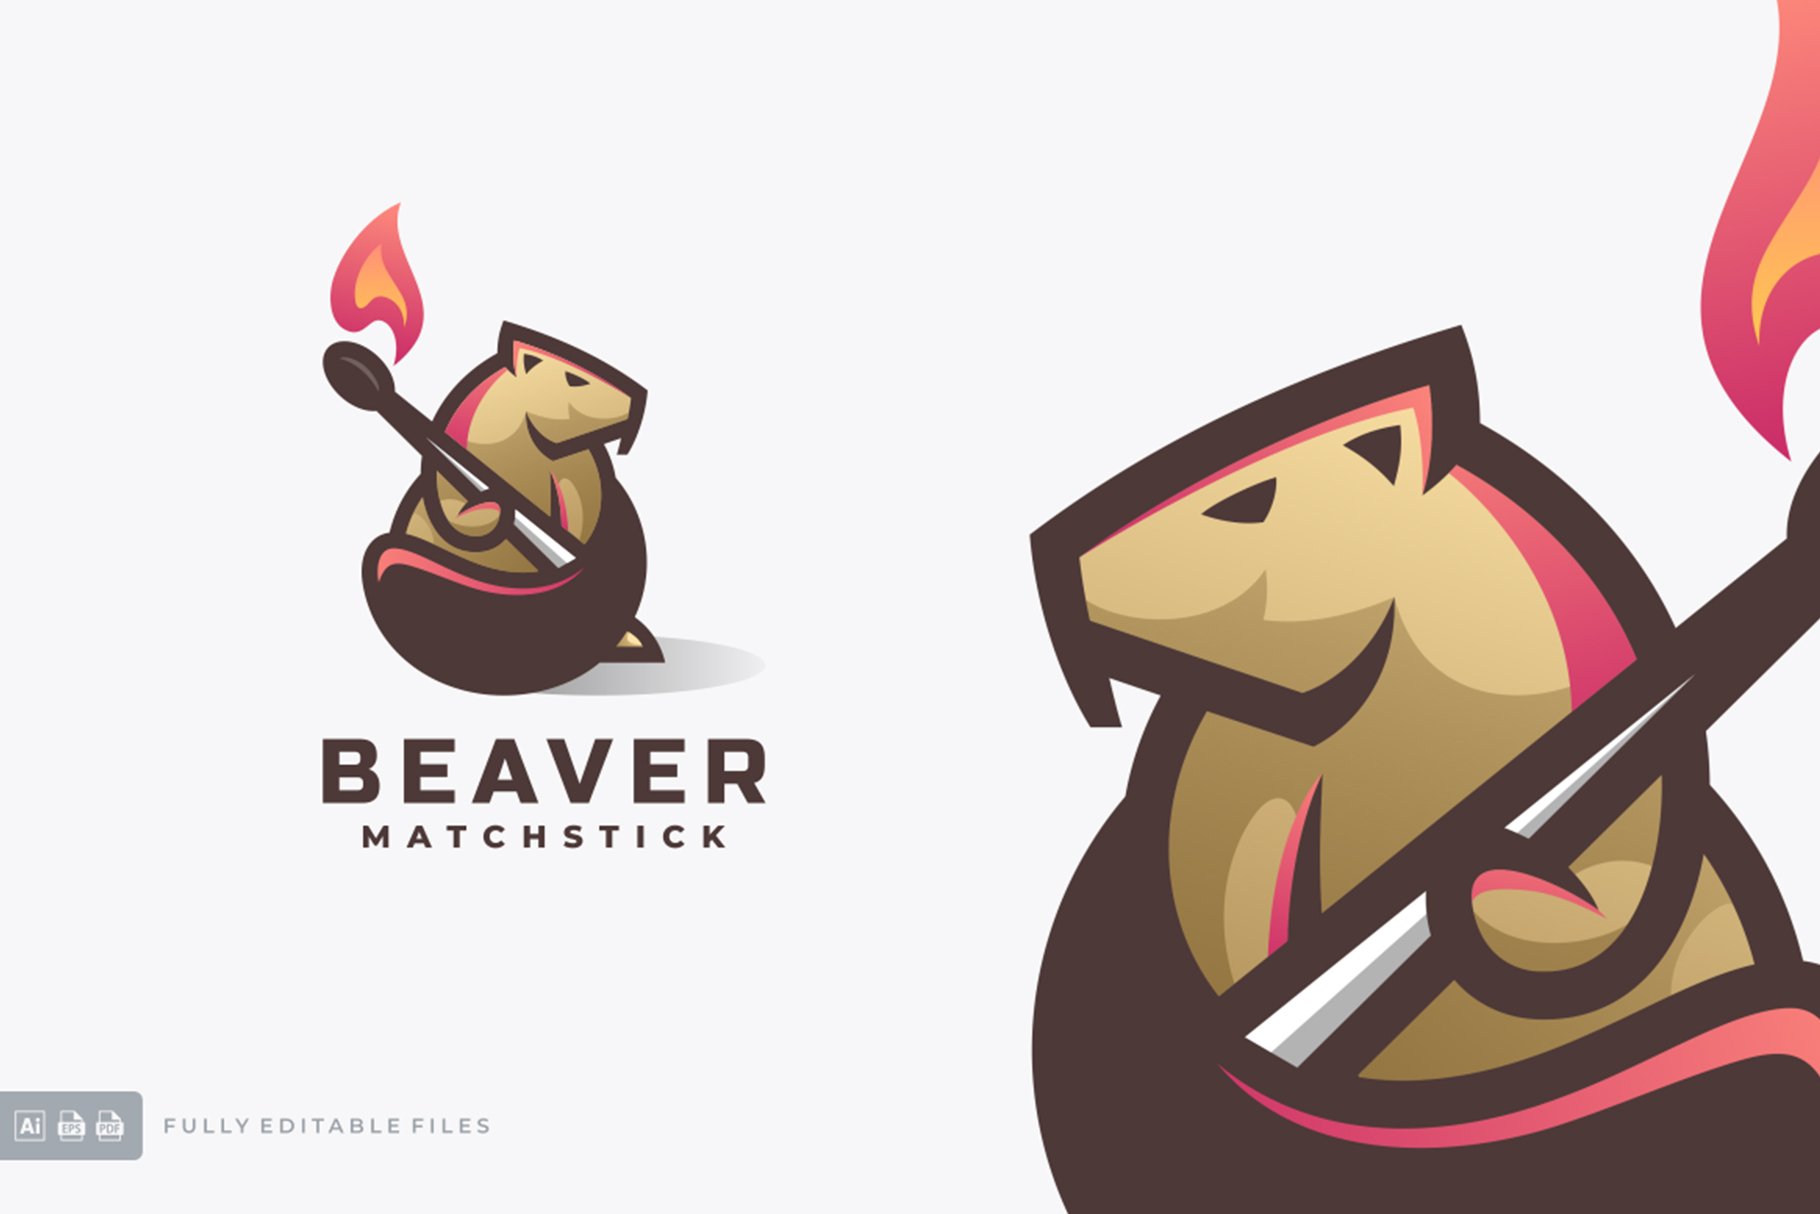 Beaver Simple Mascot Logo cover image.